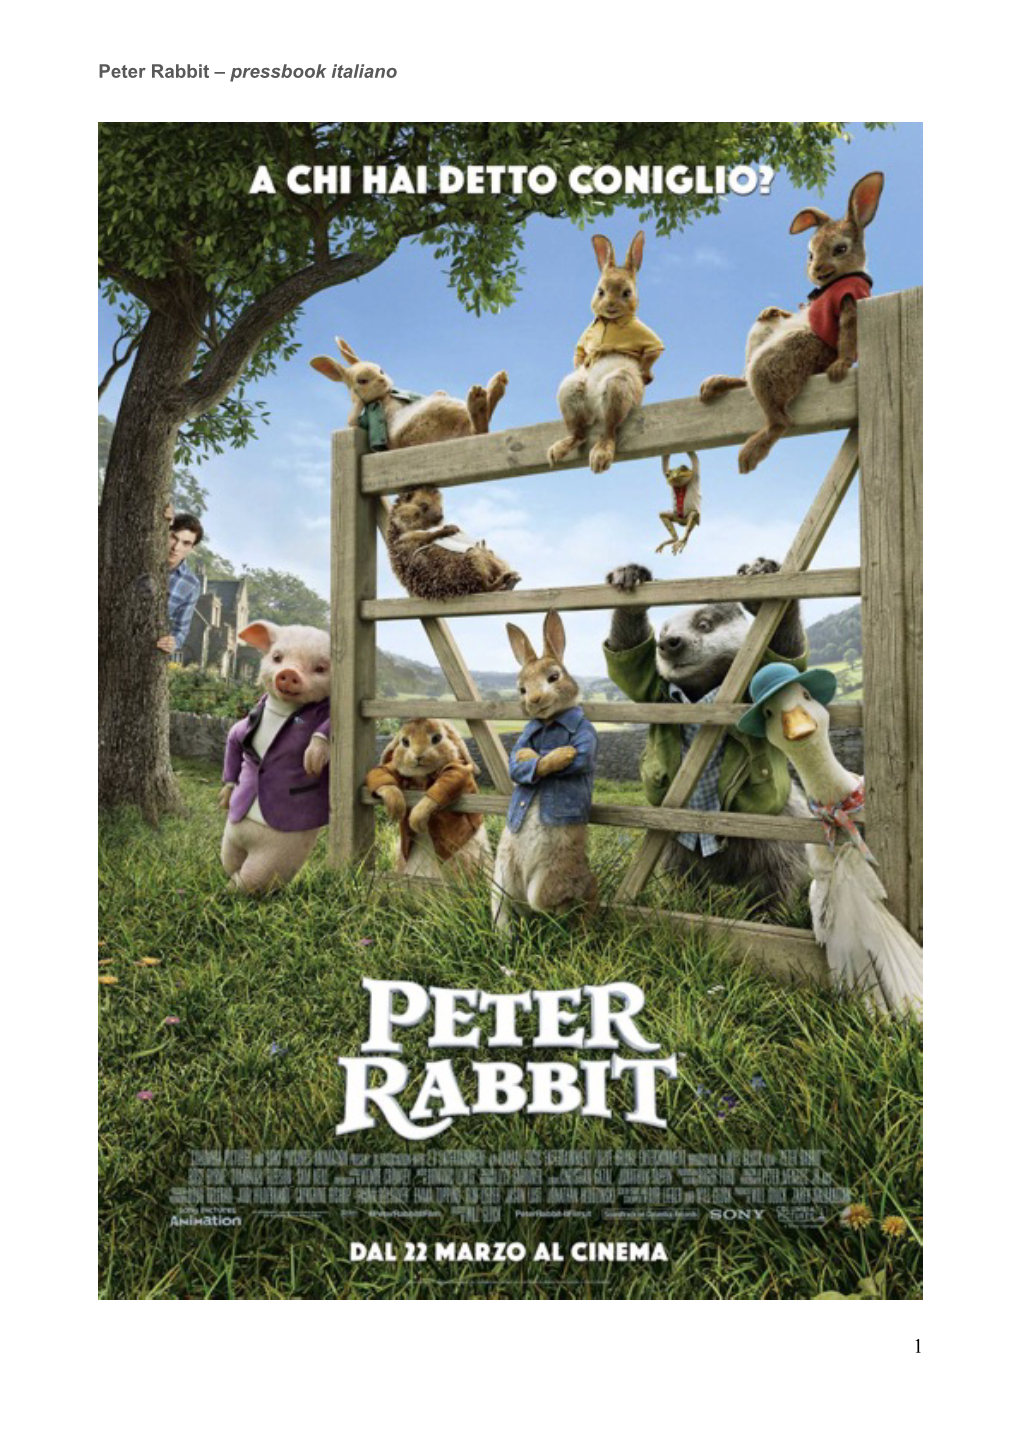 Peter Rabbit – Pressbook Italiano